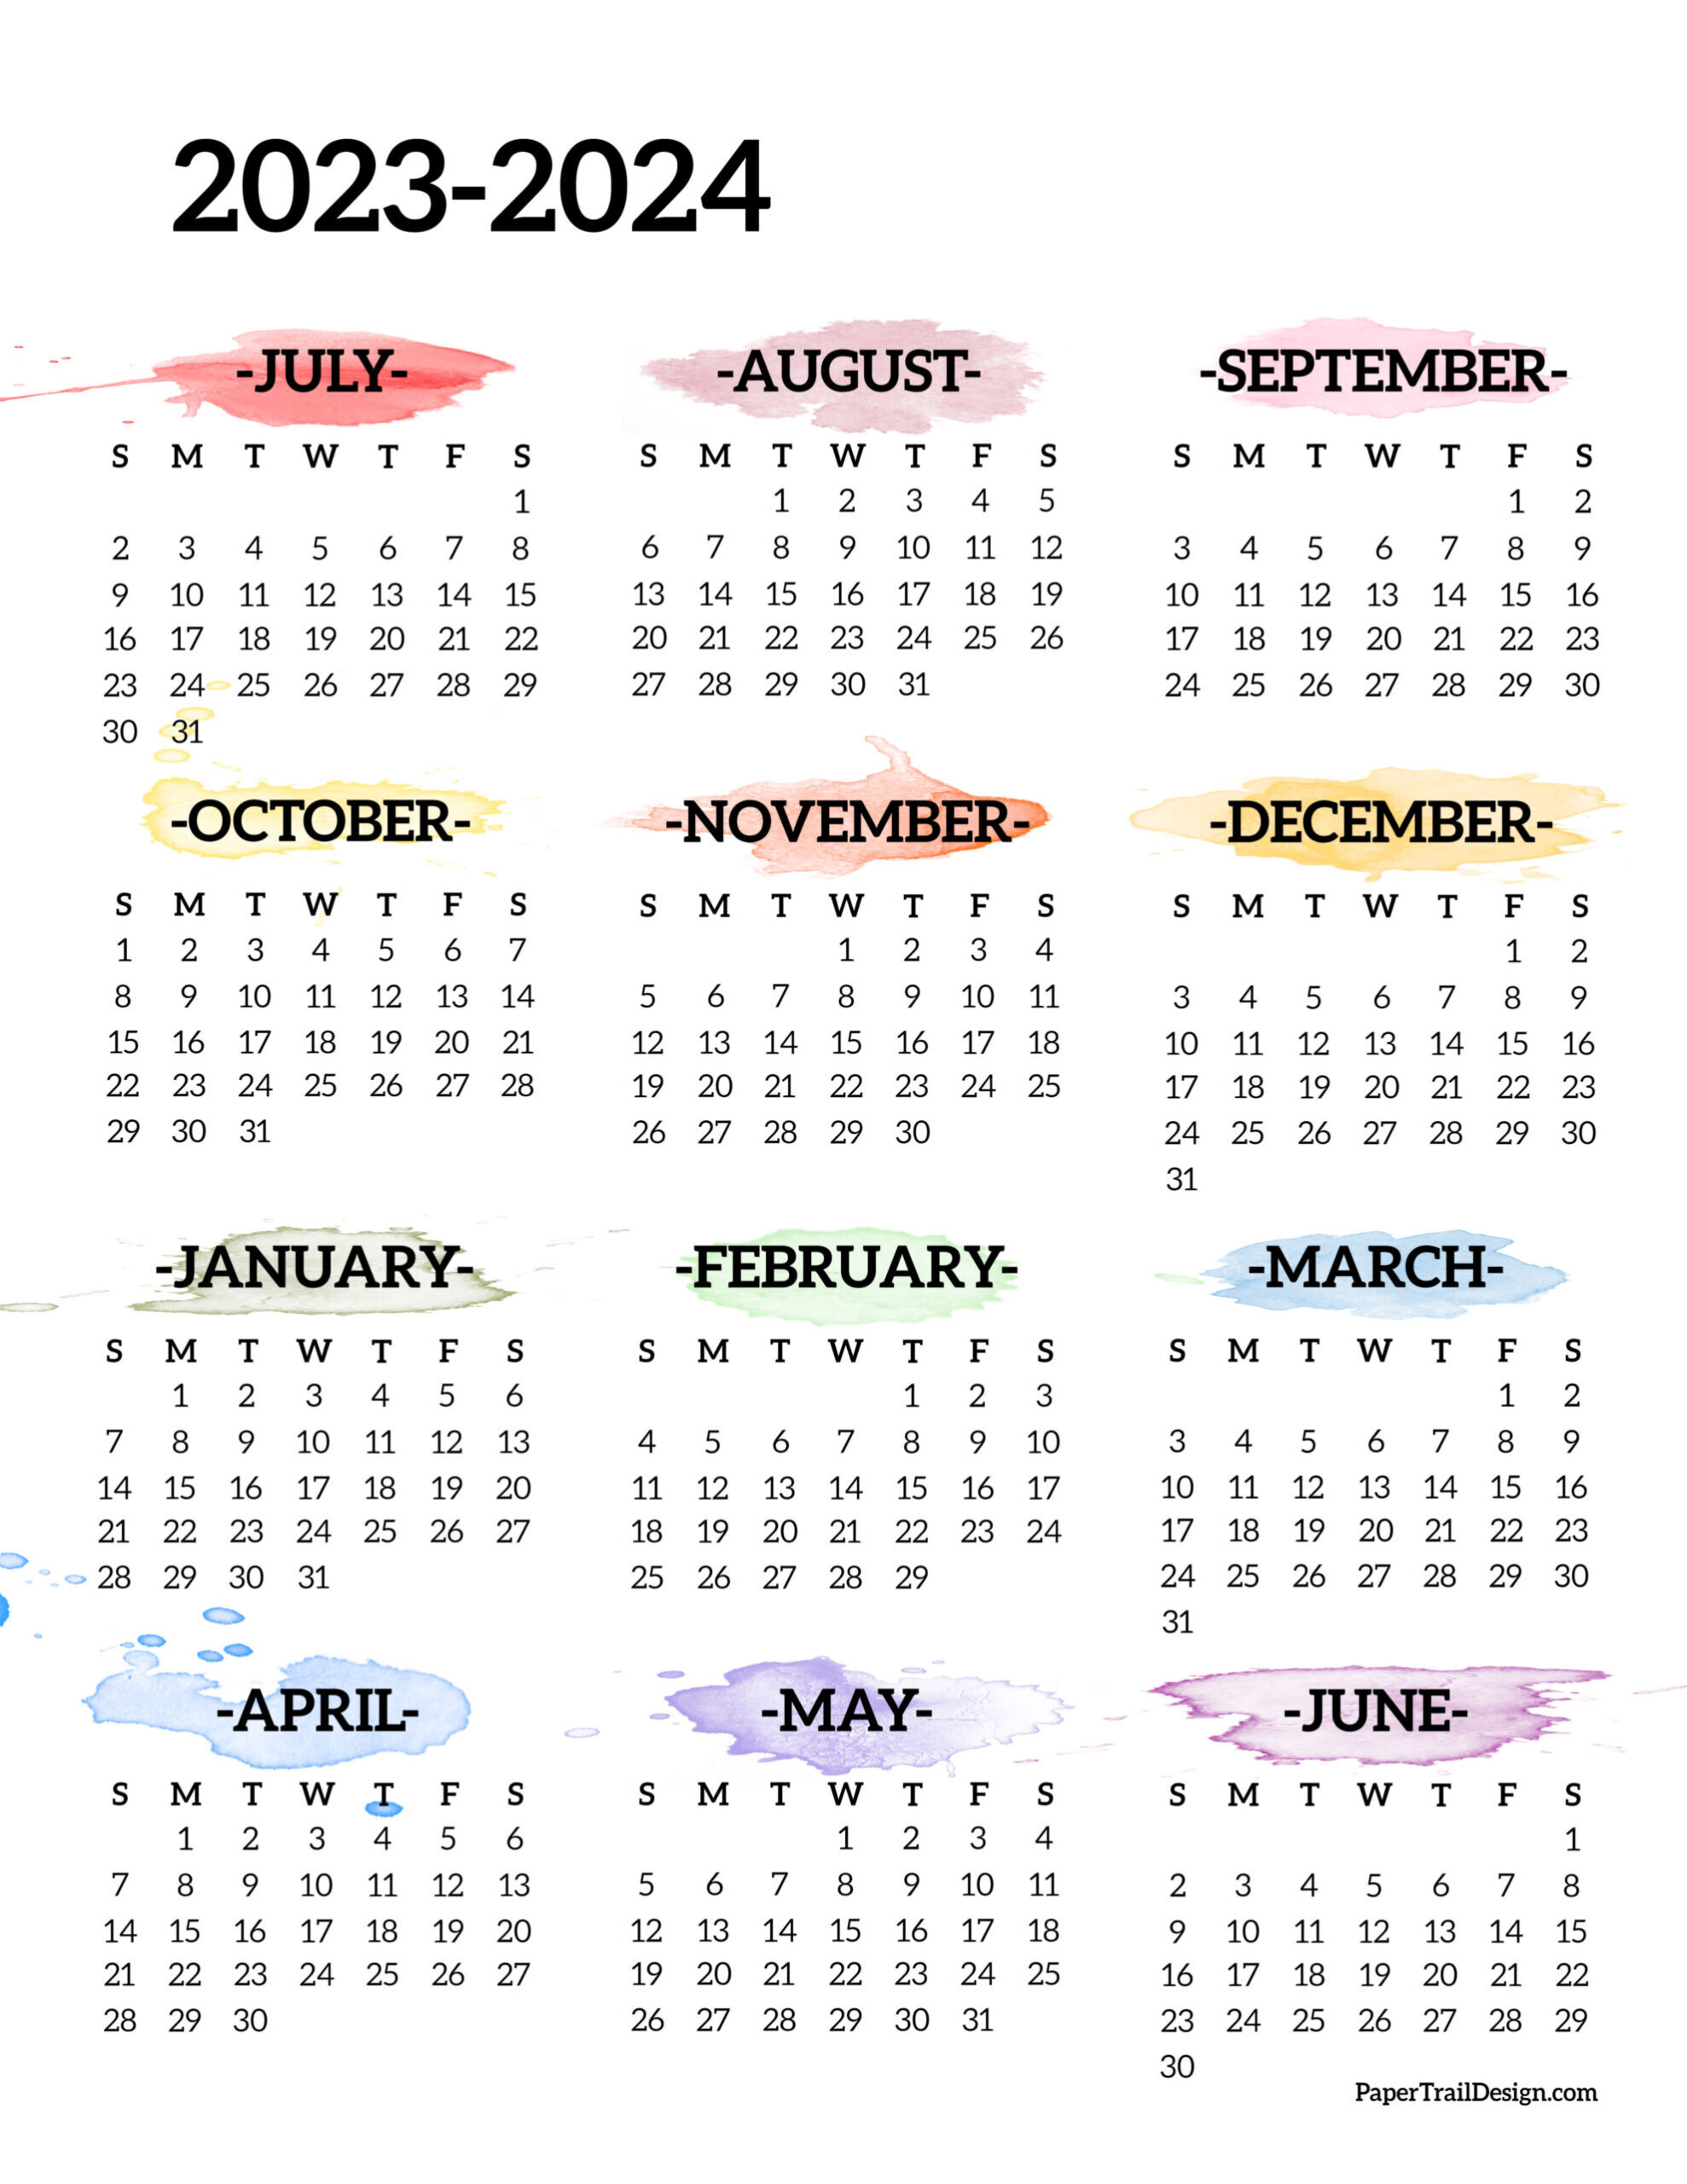 2023-2024 School Year Calendar Free Printable - Paper Trail Design with Calendar June 2023 - June 2024